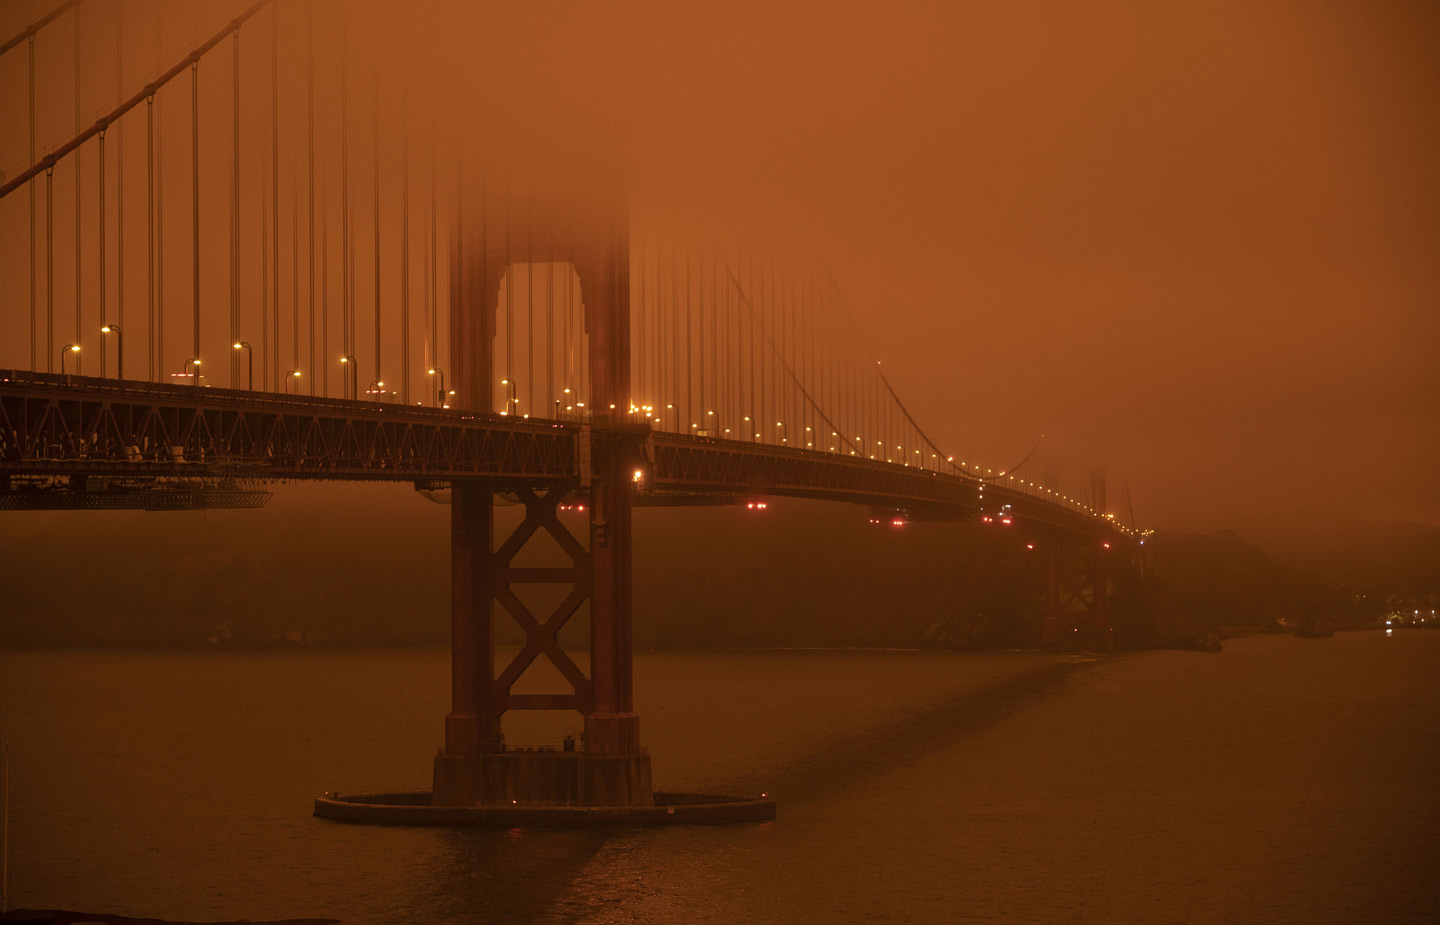 Image of Golden Gate Bridge shrouded in smoke